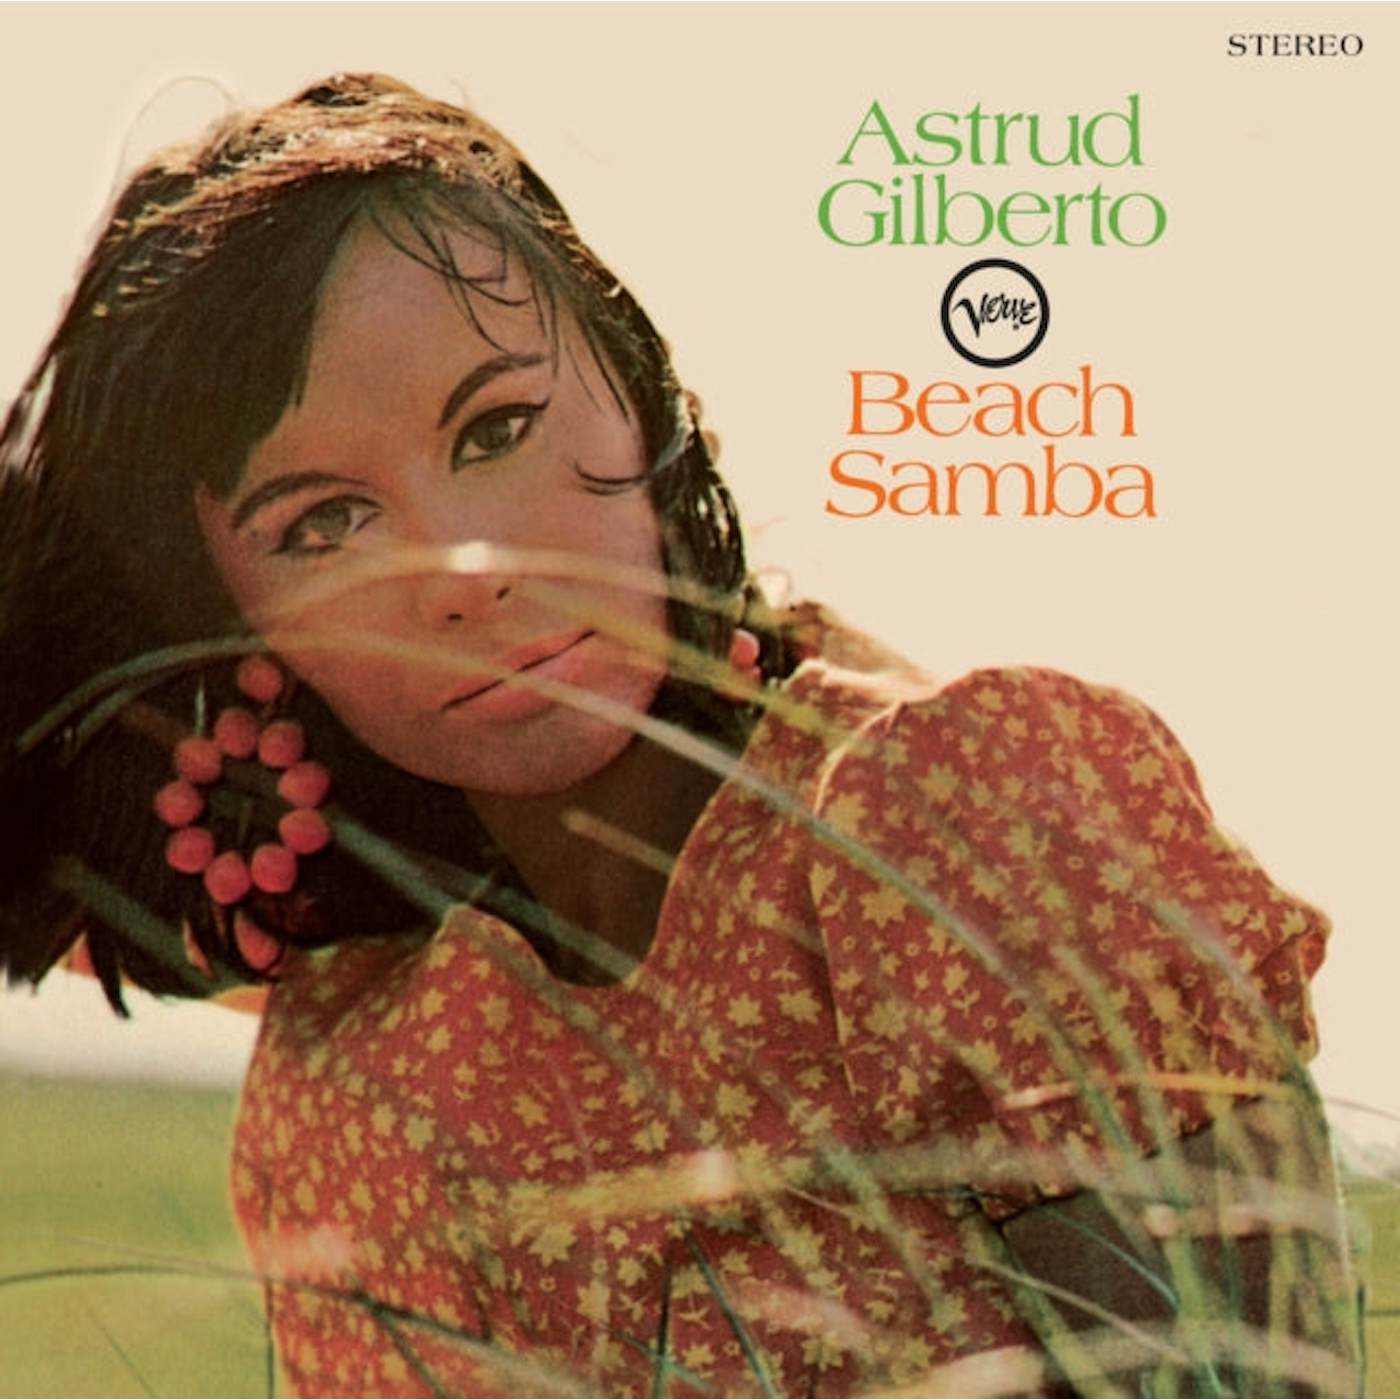 Astrud Gilberto LP Vinyl Record - Beach Samba (Limited Edition)